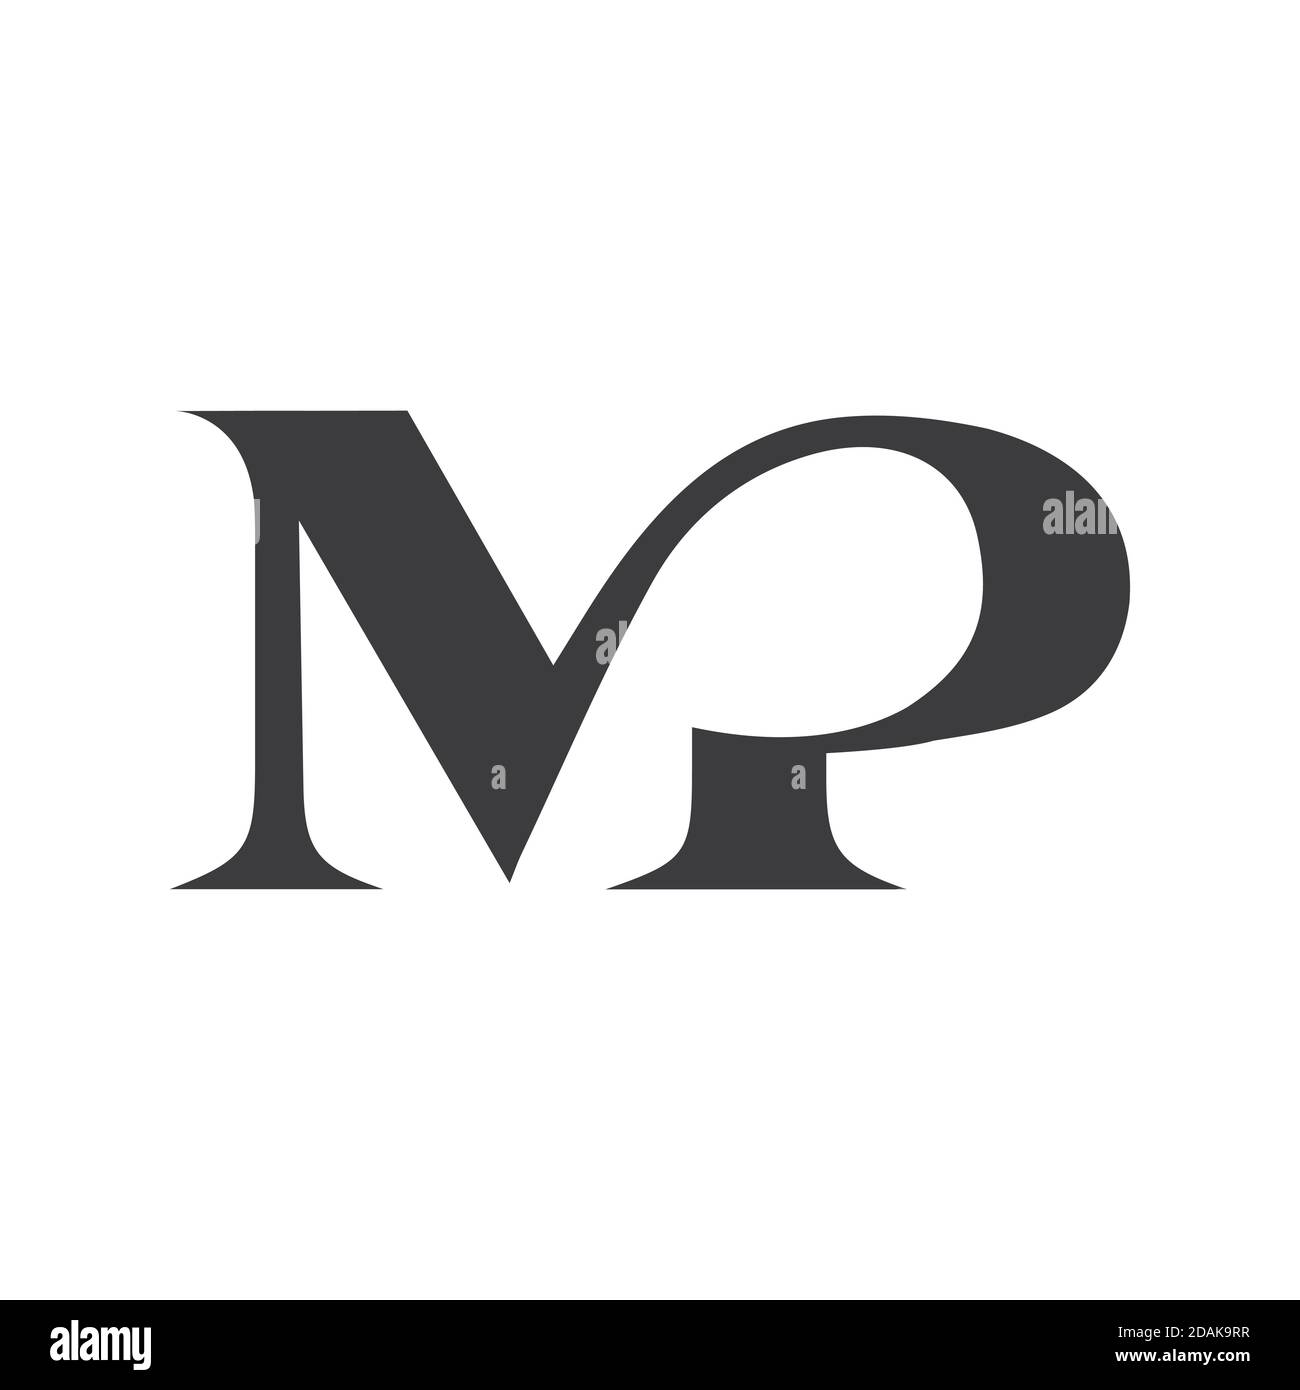 love pm logo images